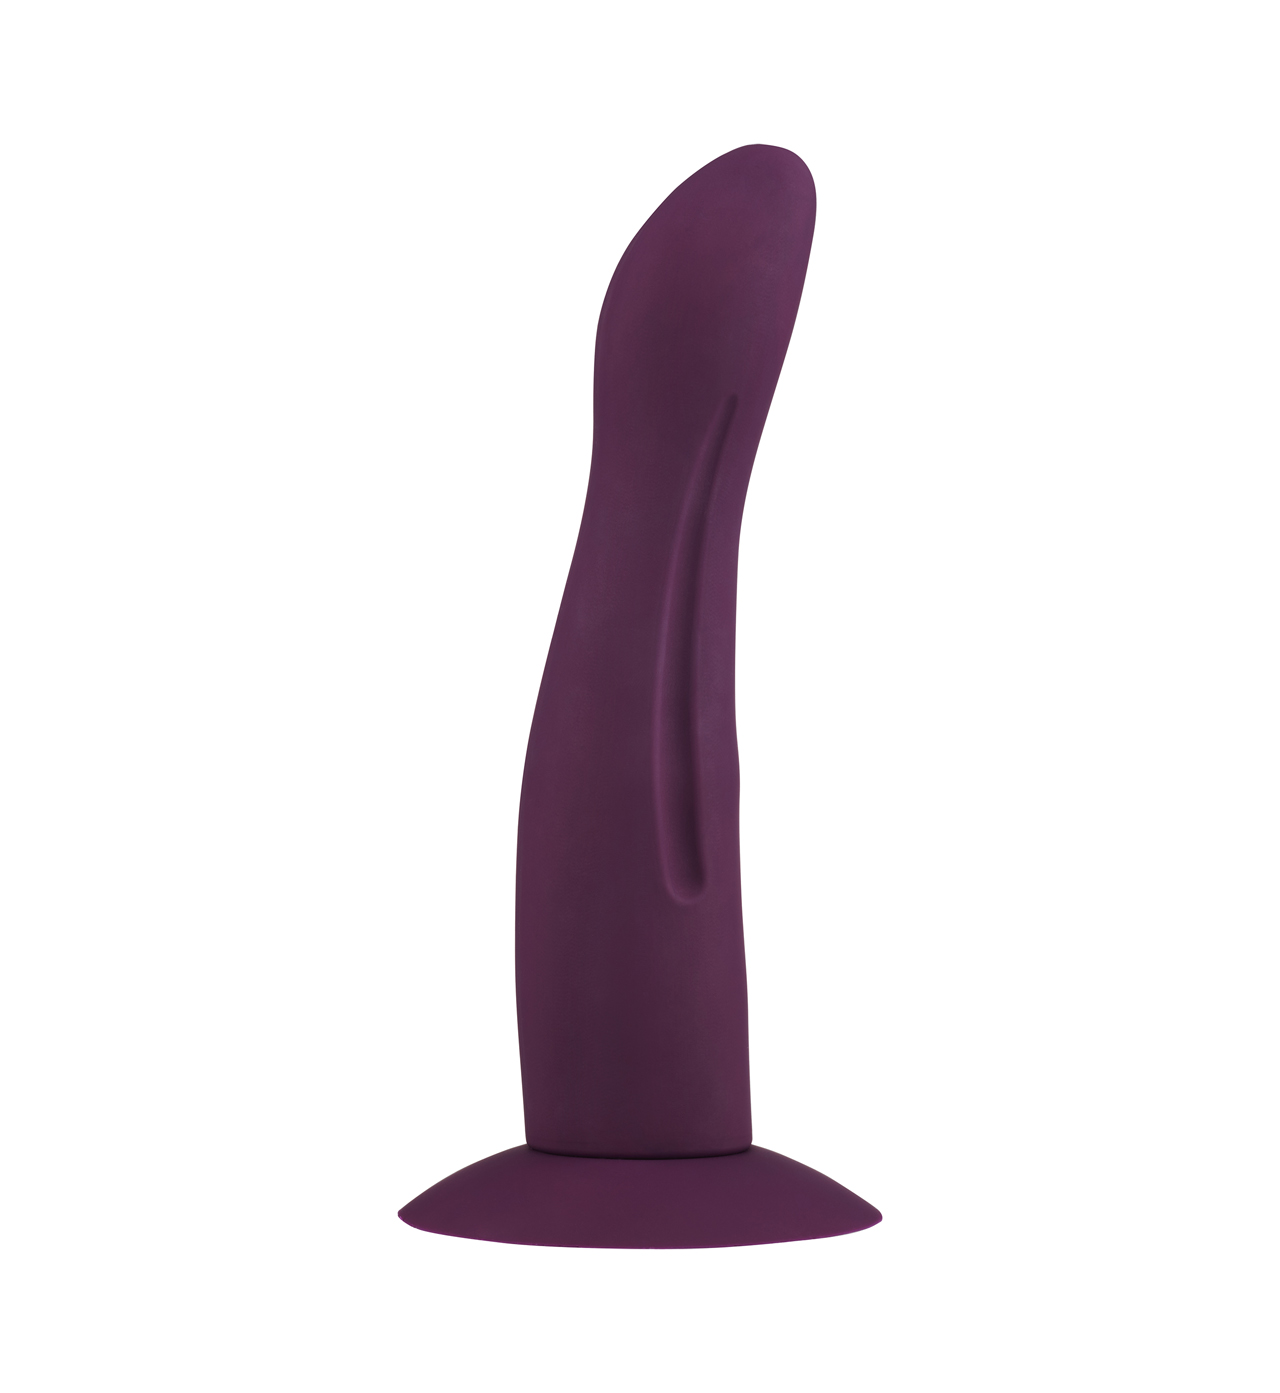 Excite Me - Dildo with curved tip for G-spot stimulation - RFSU